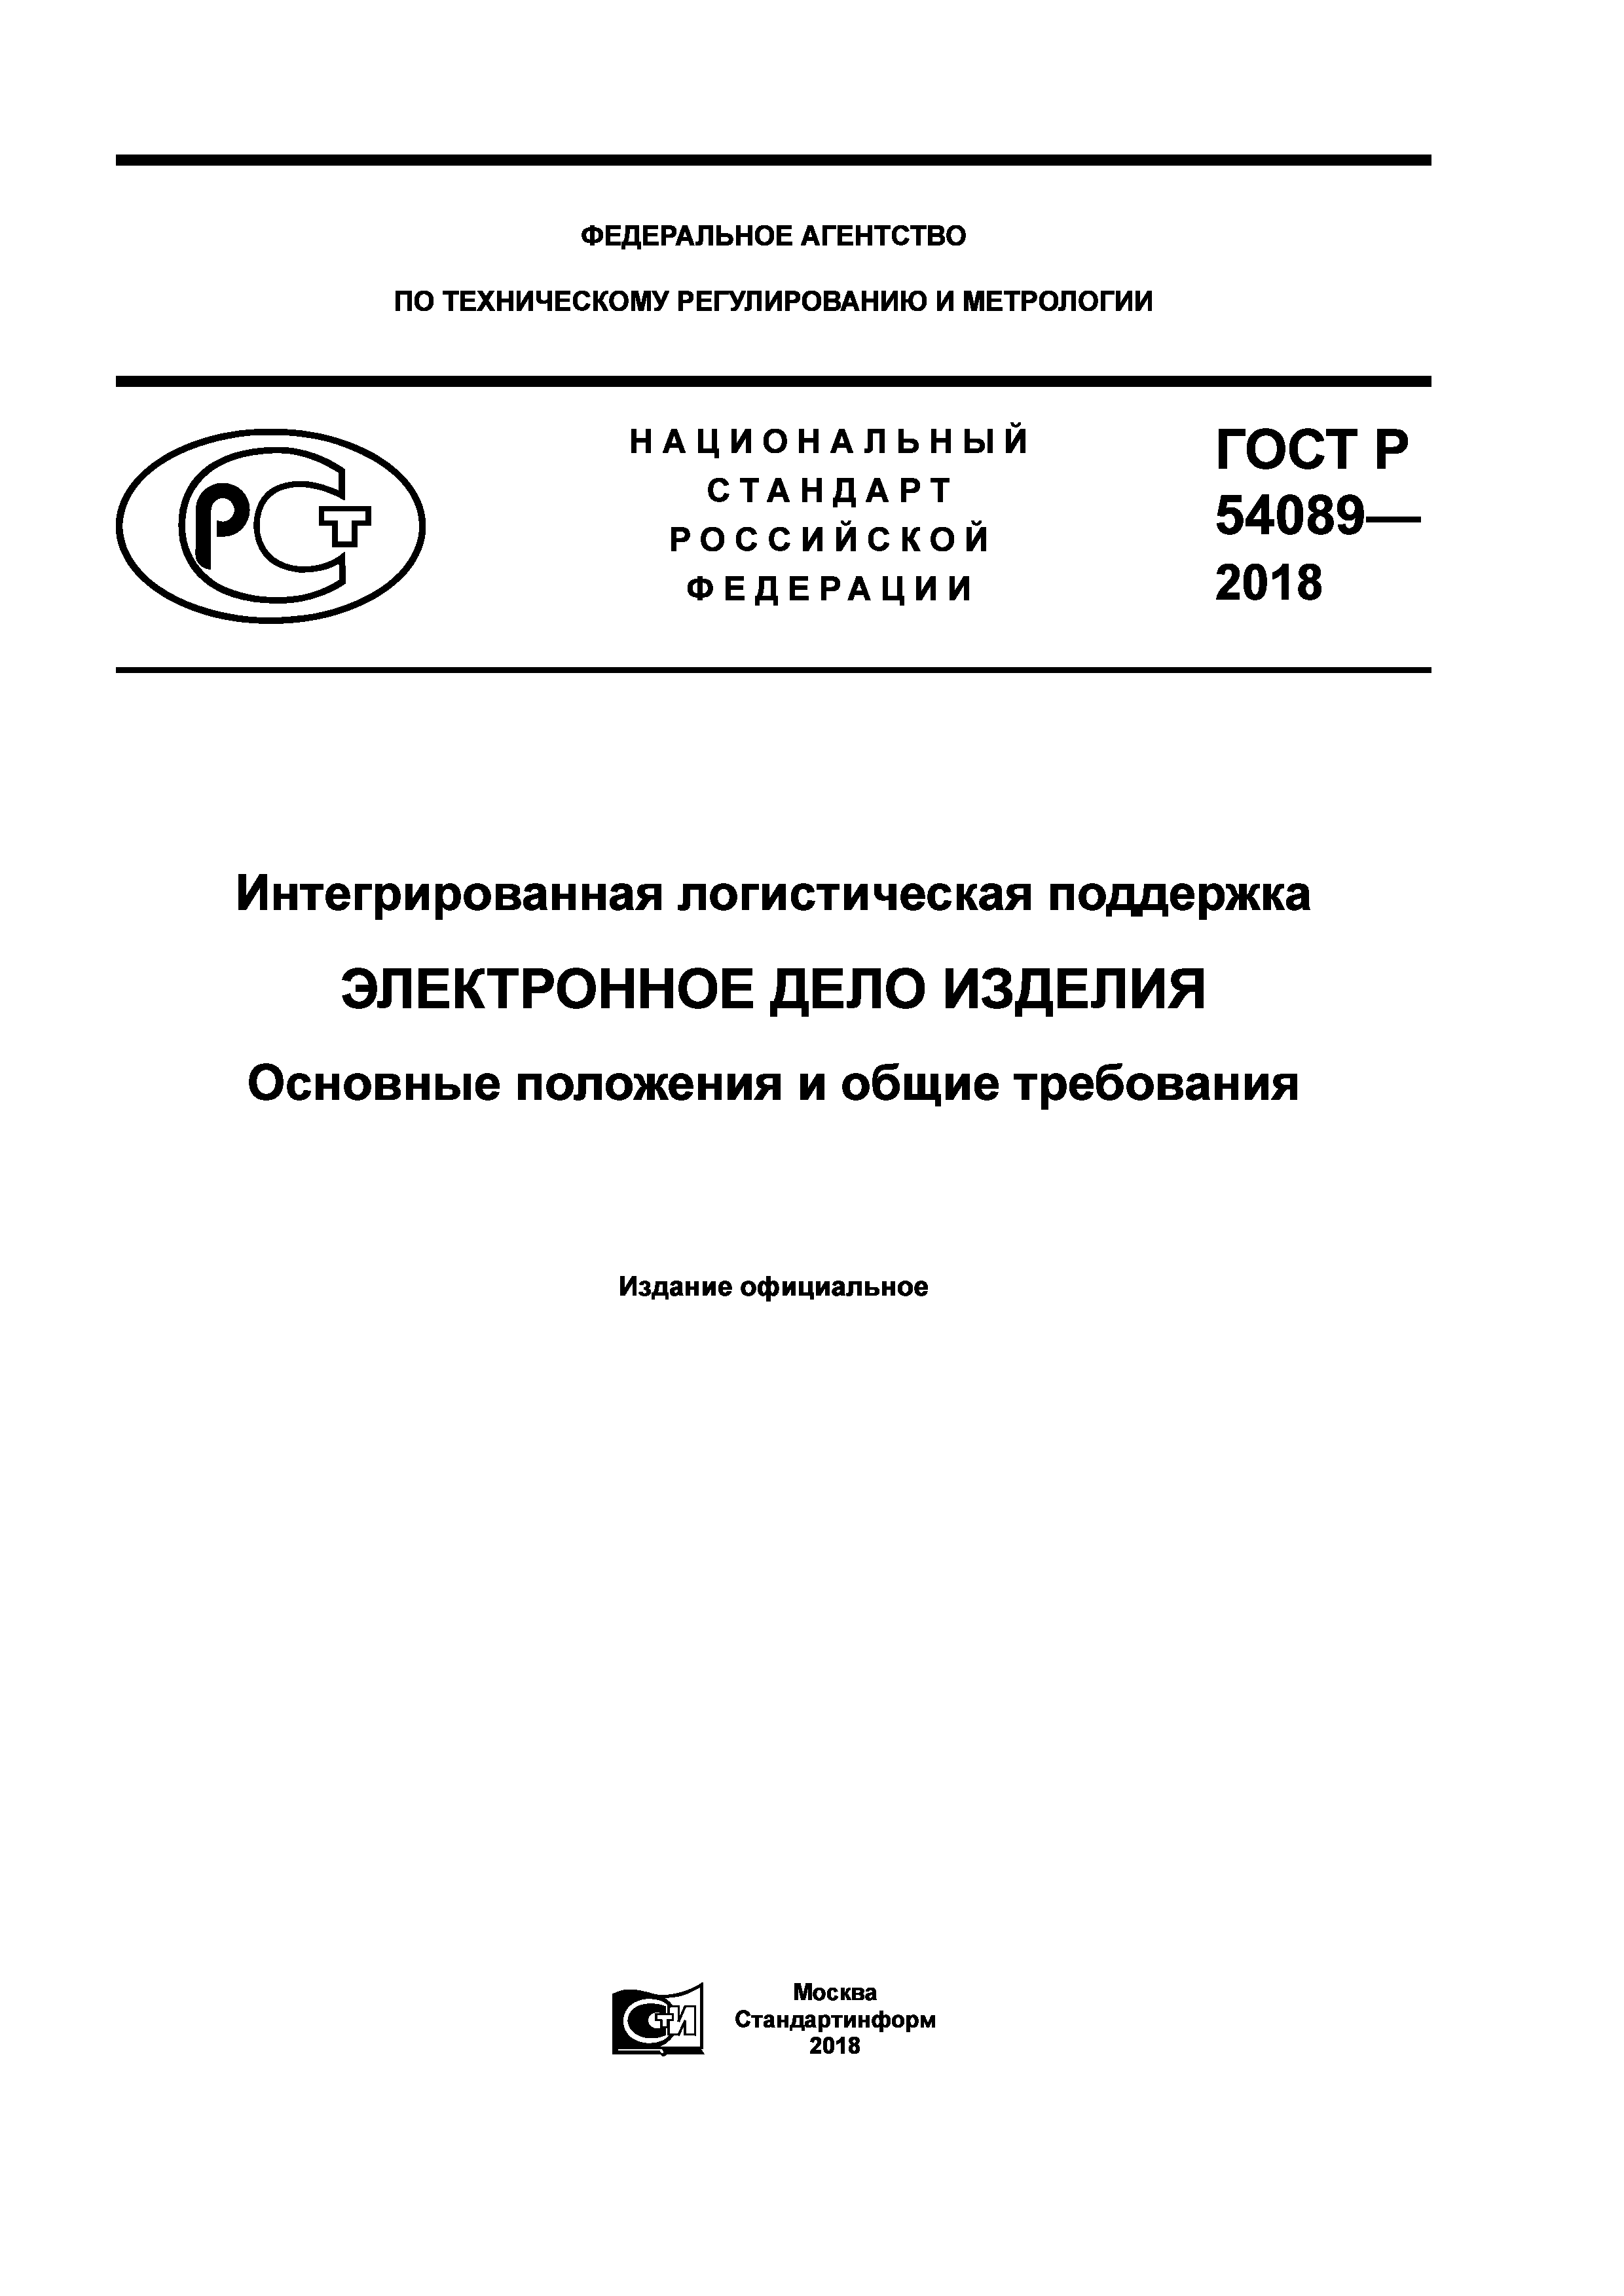 ГОСТ Р 54089-2018